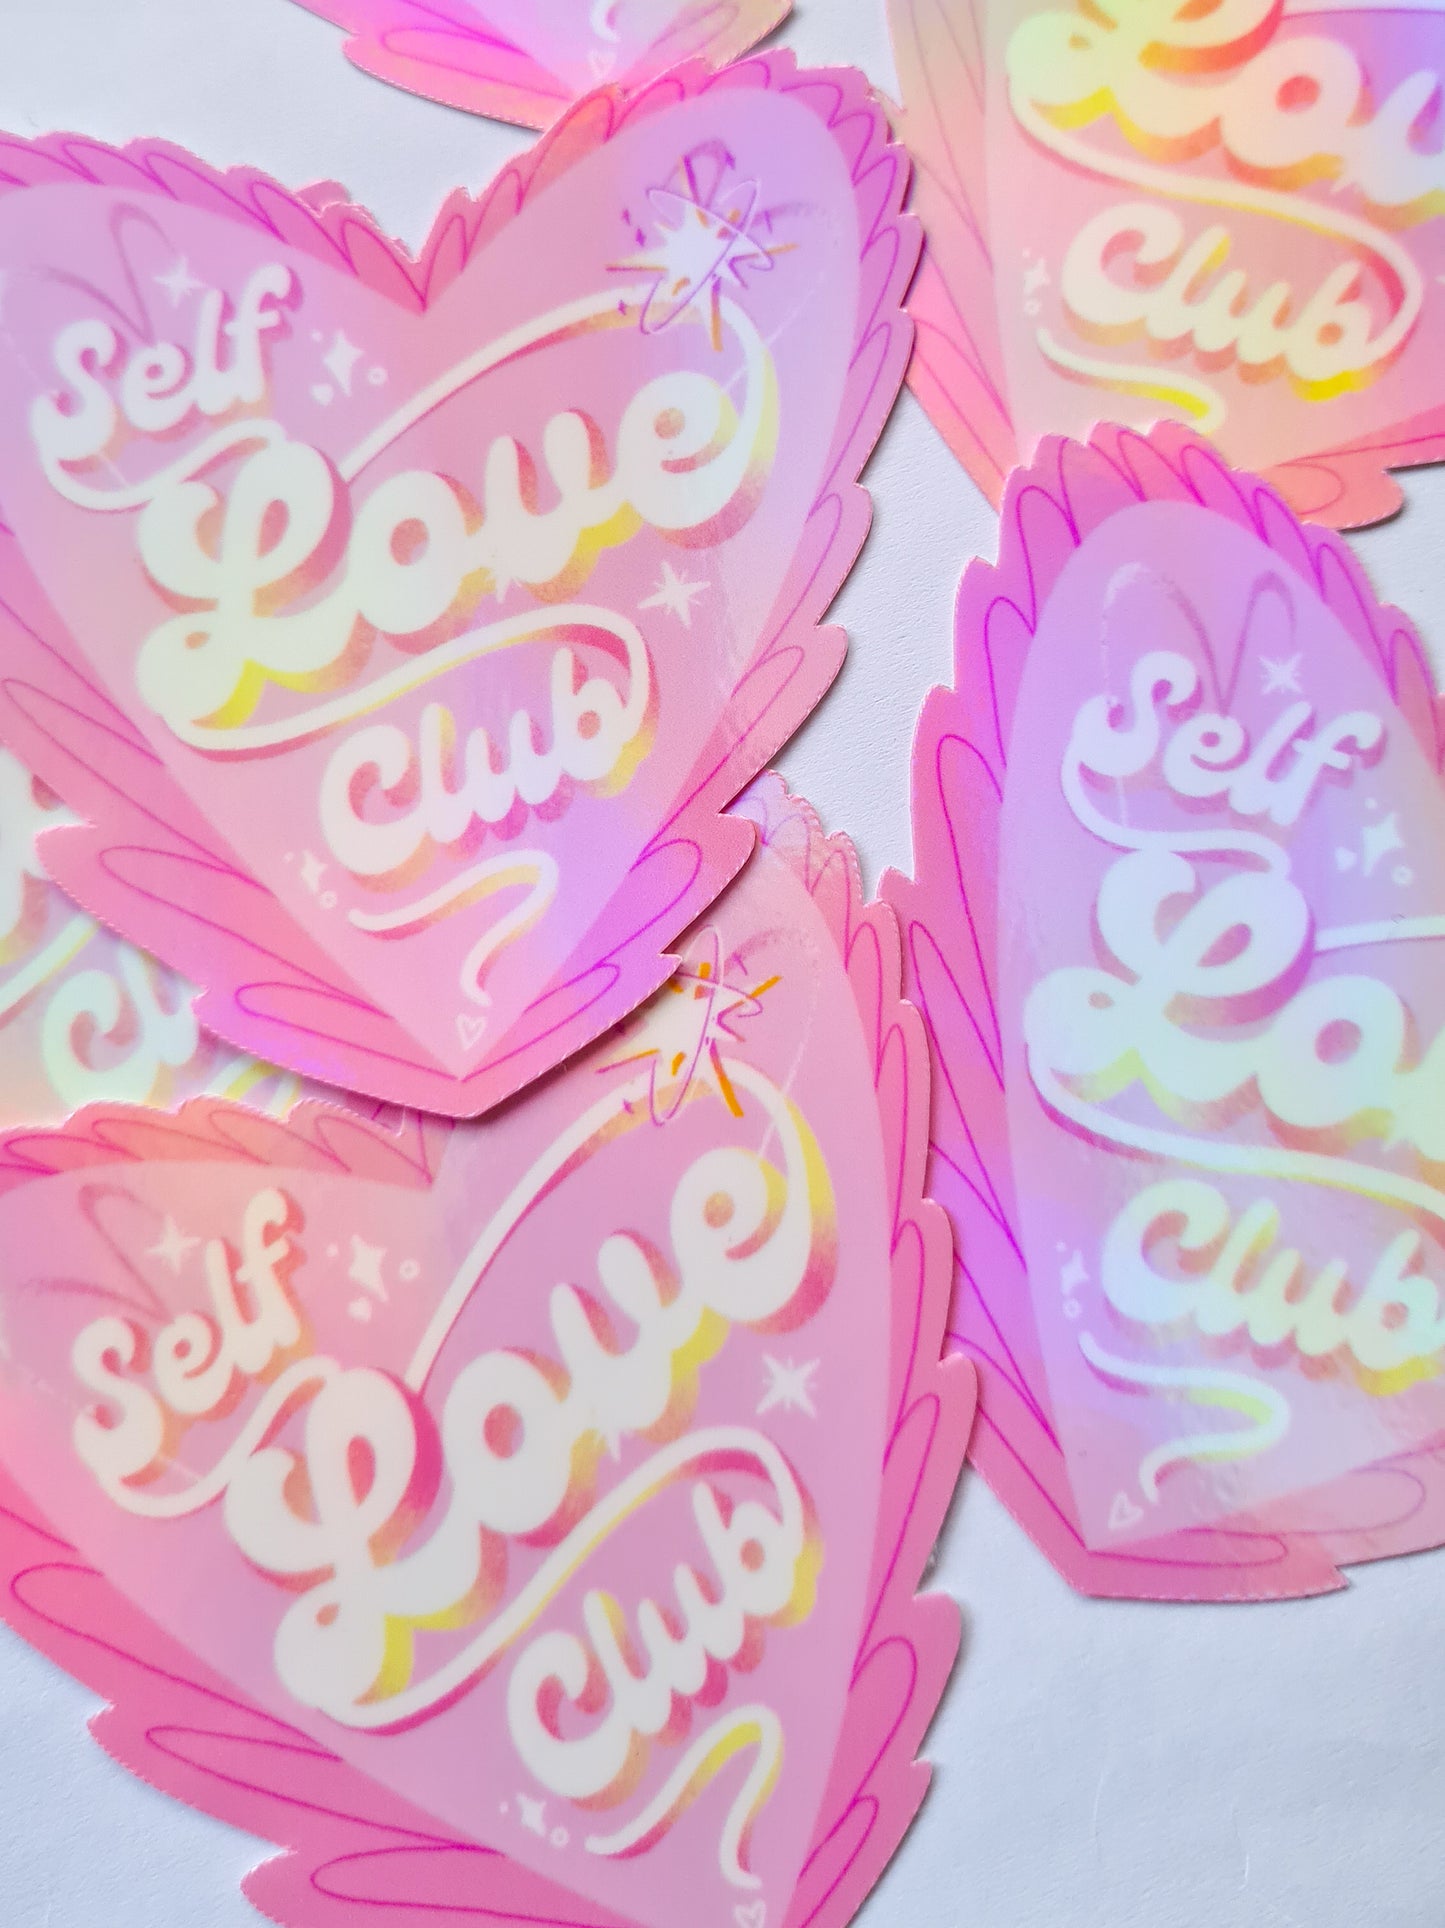 Self Love Club type sticker - Woman Create